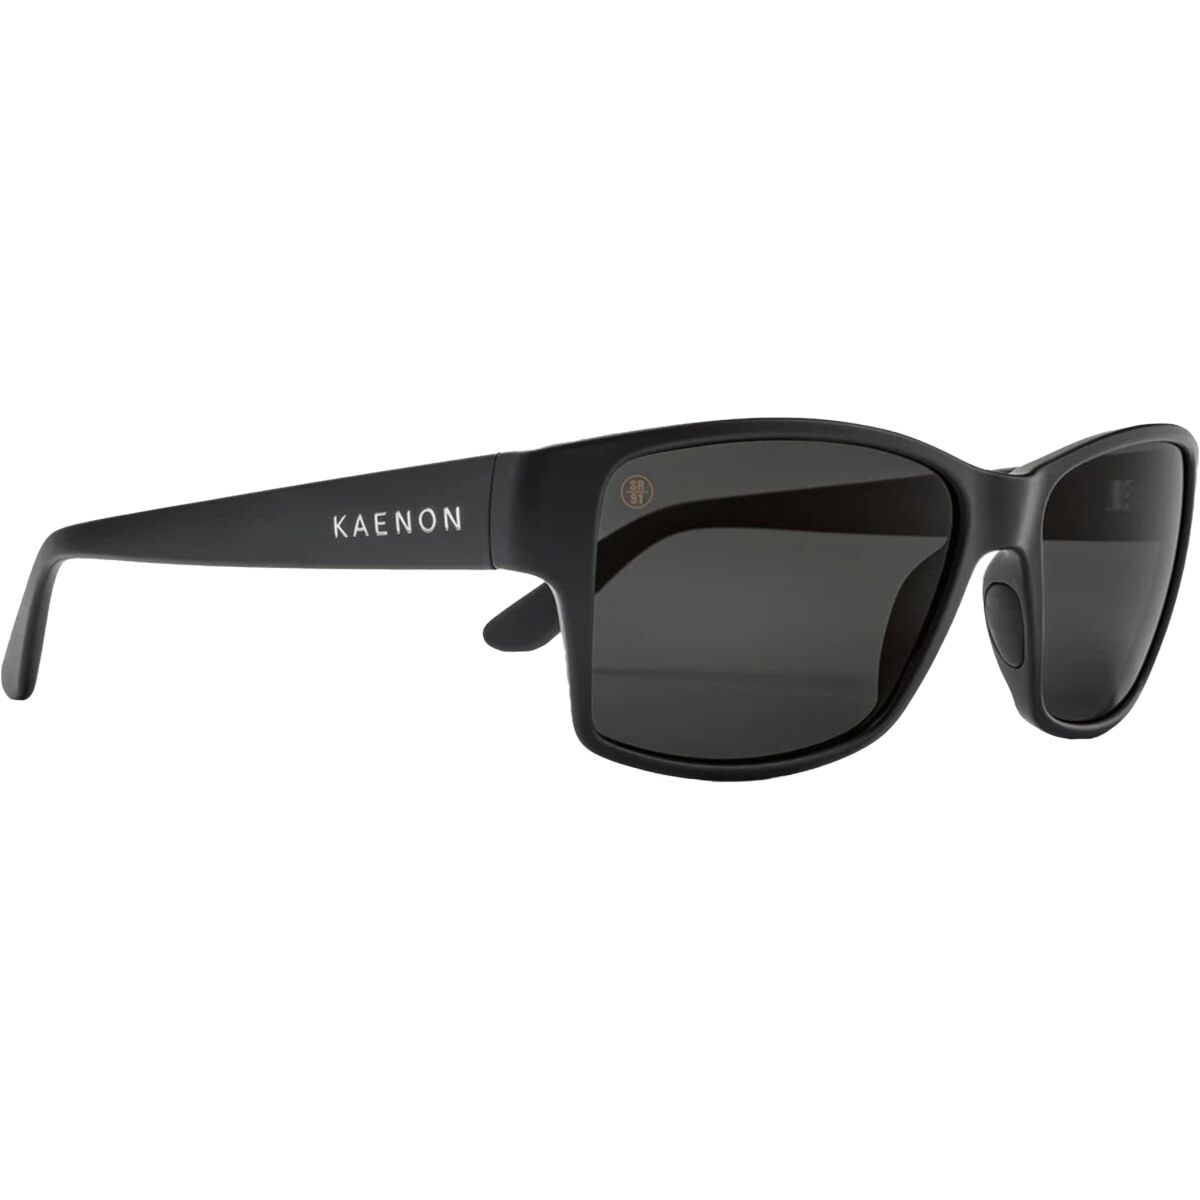 Kaenon El Cap Polarized Sunglasses - Men's